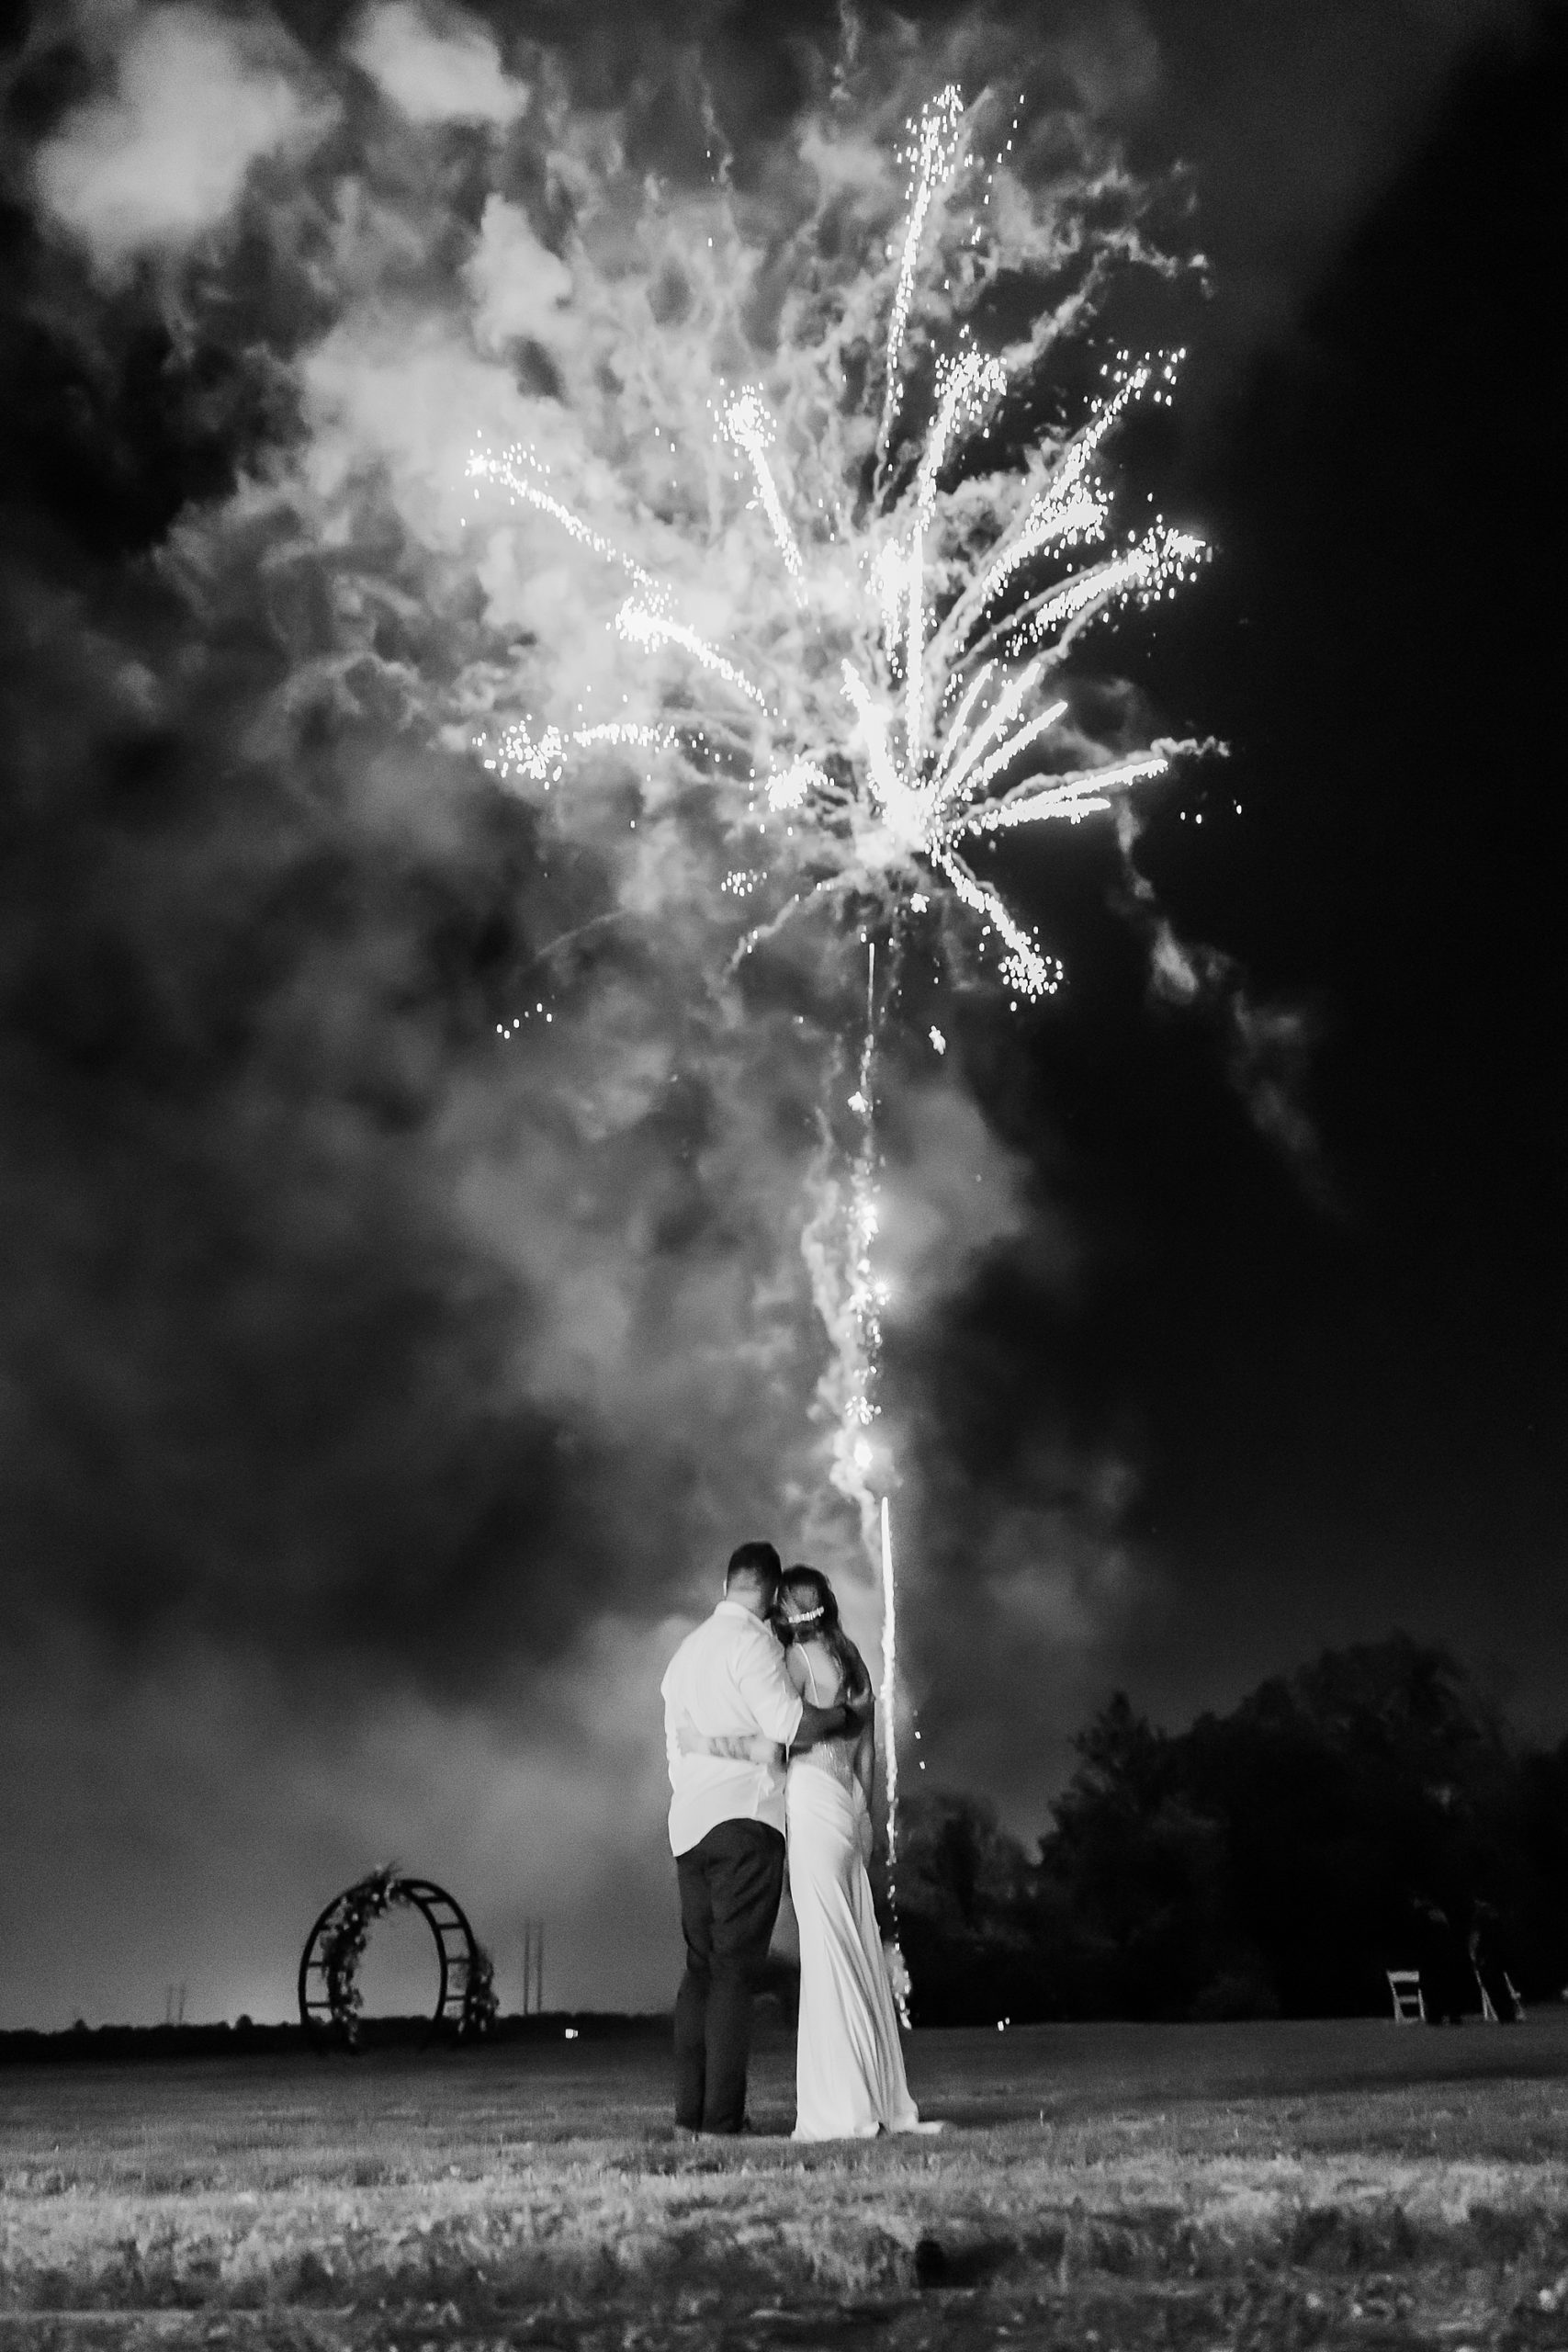 bride and groom hug during fireworks display at John's Island